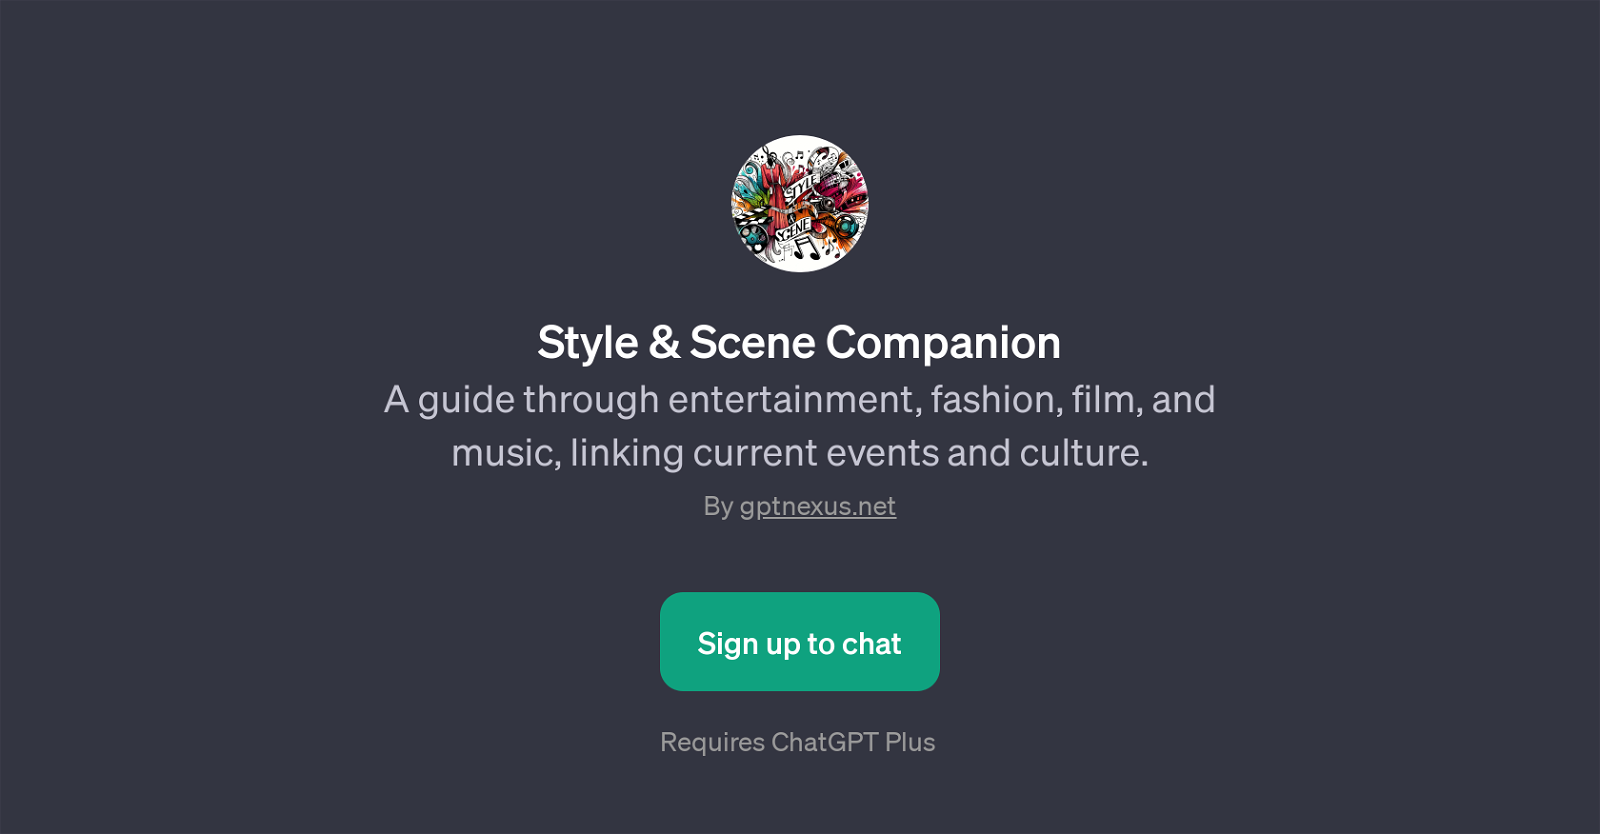 Style & Scene Companion website